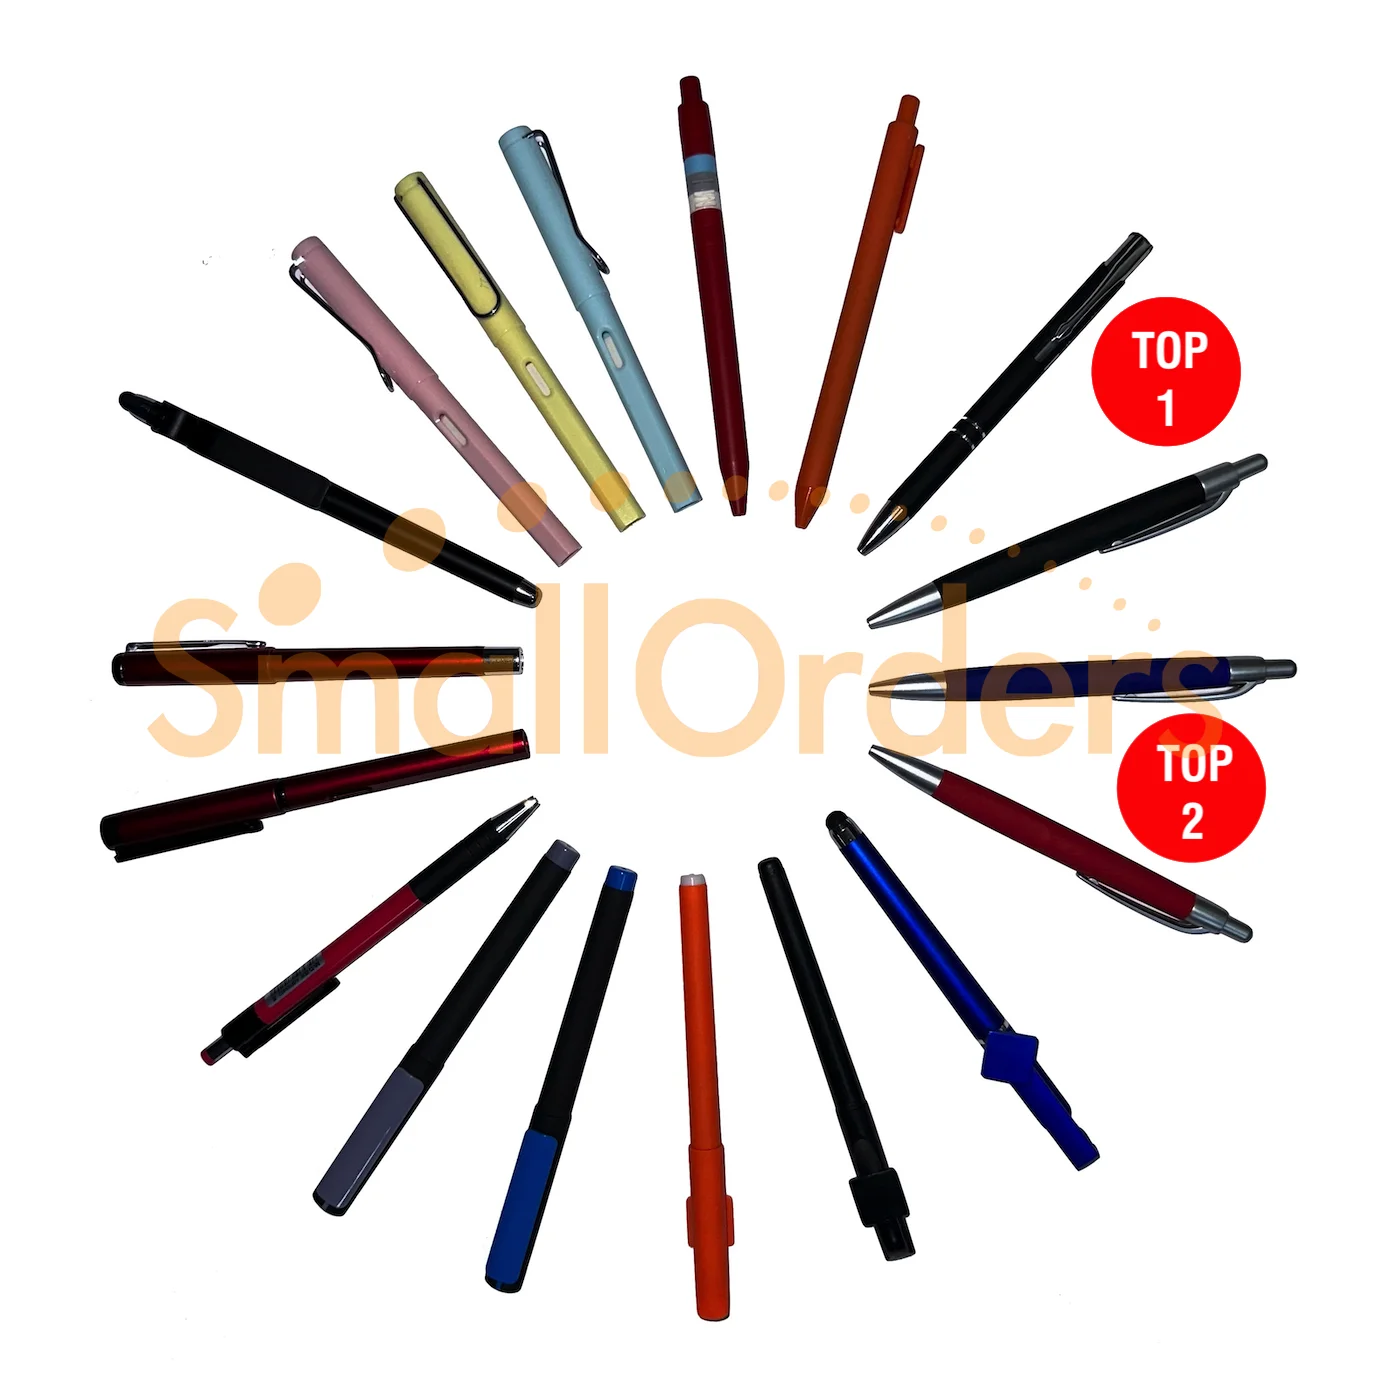 Promotional Custom pens logo printed boligrafo por ballpoint metal plastic gel pens sublimation promotional pen